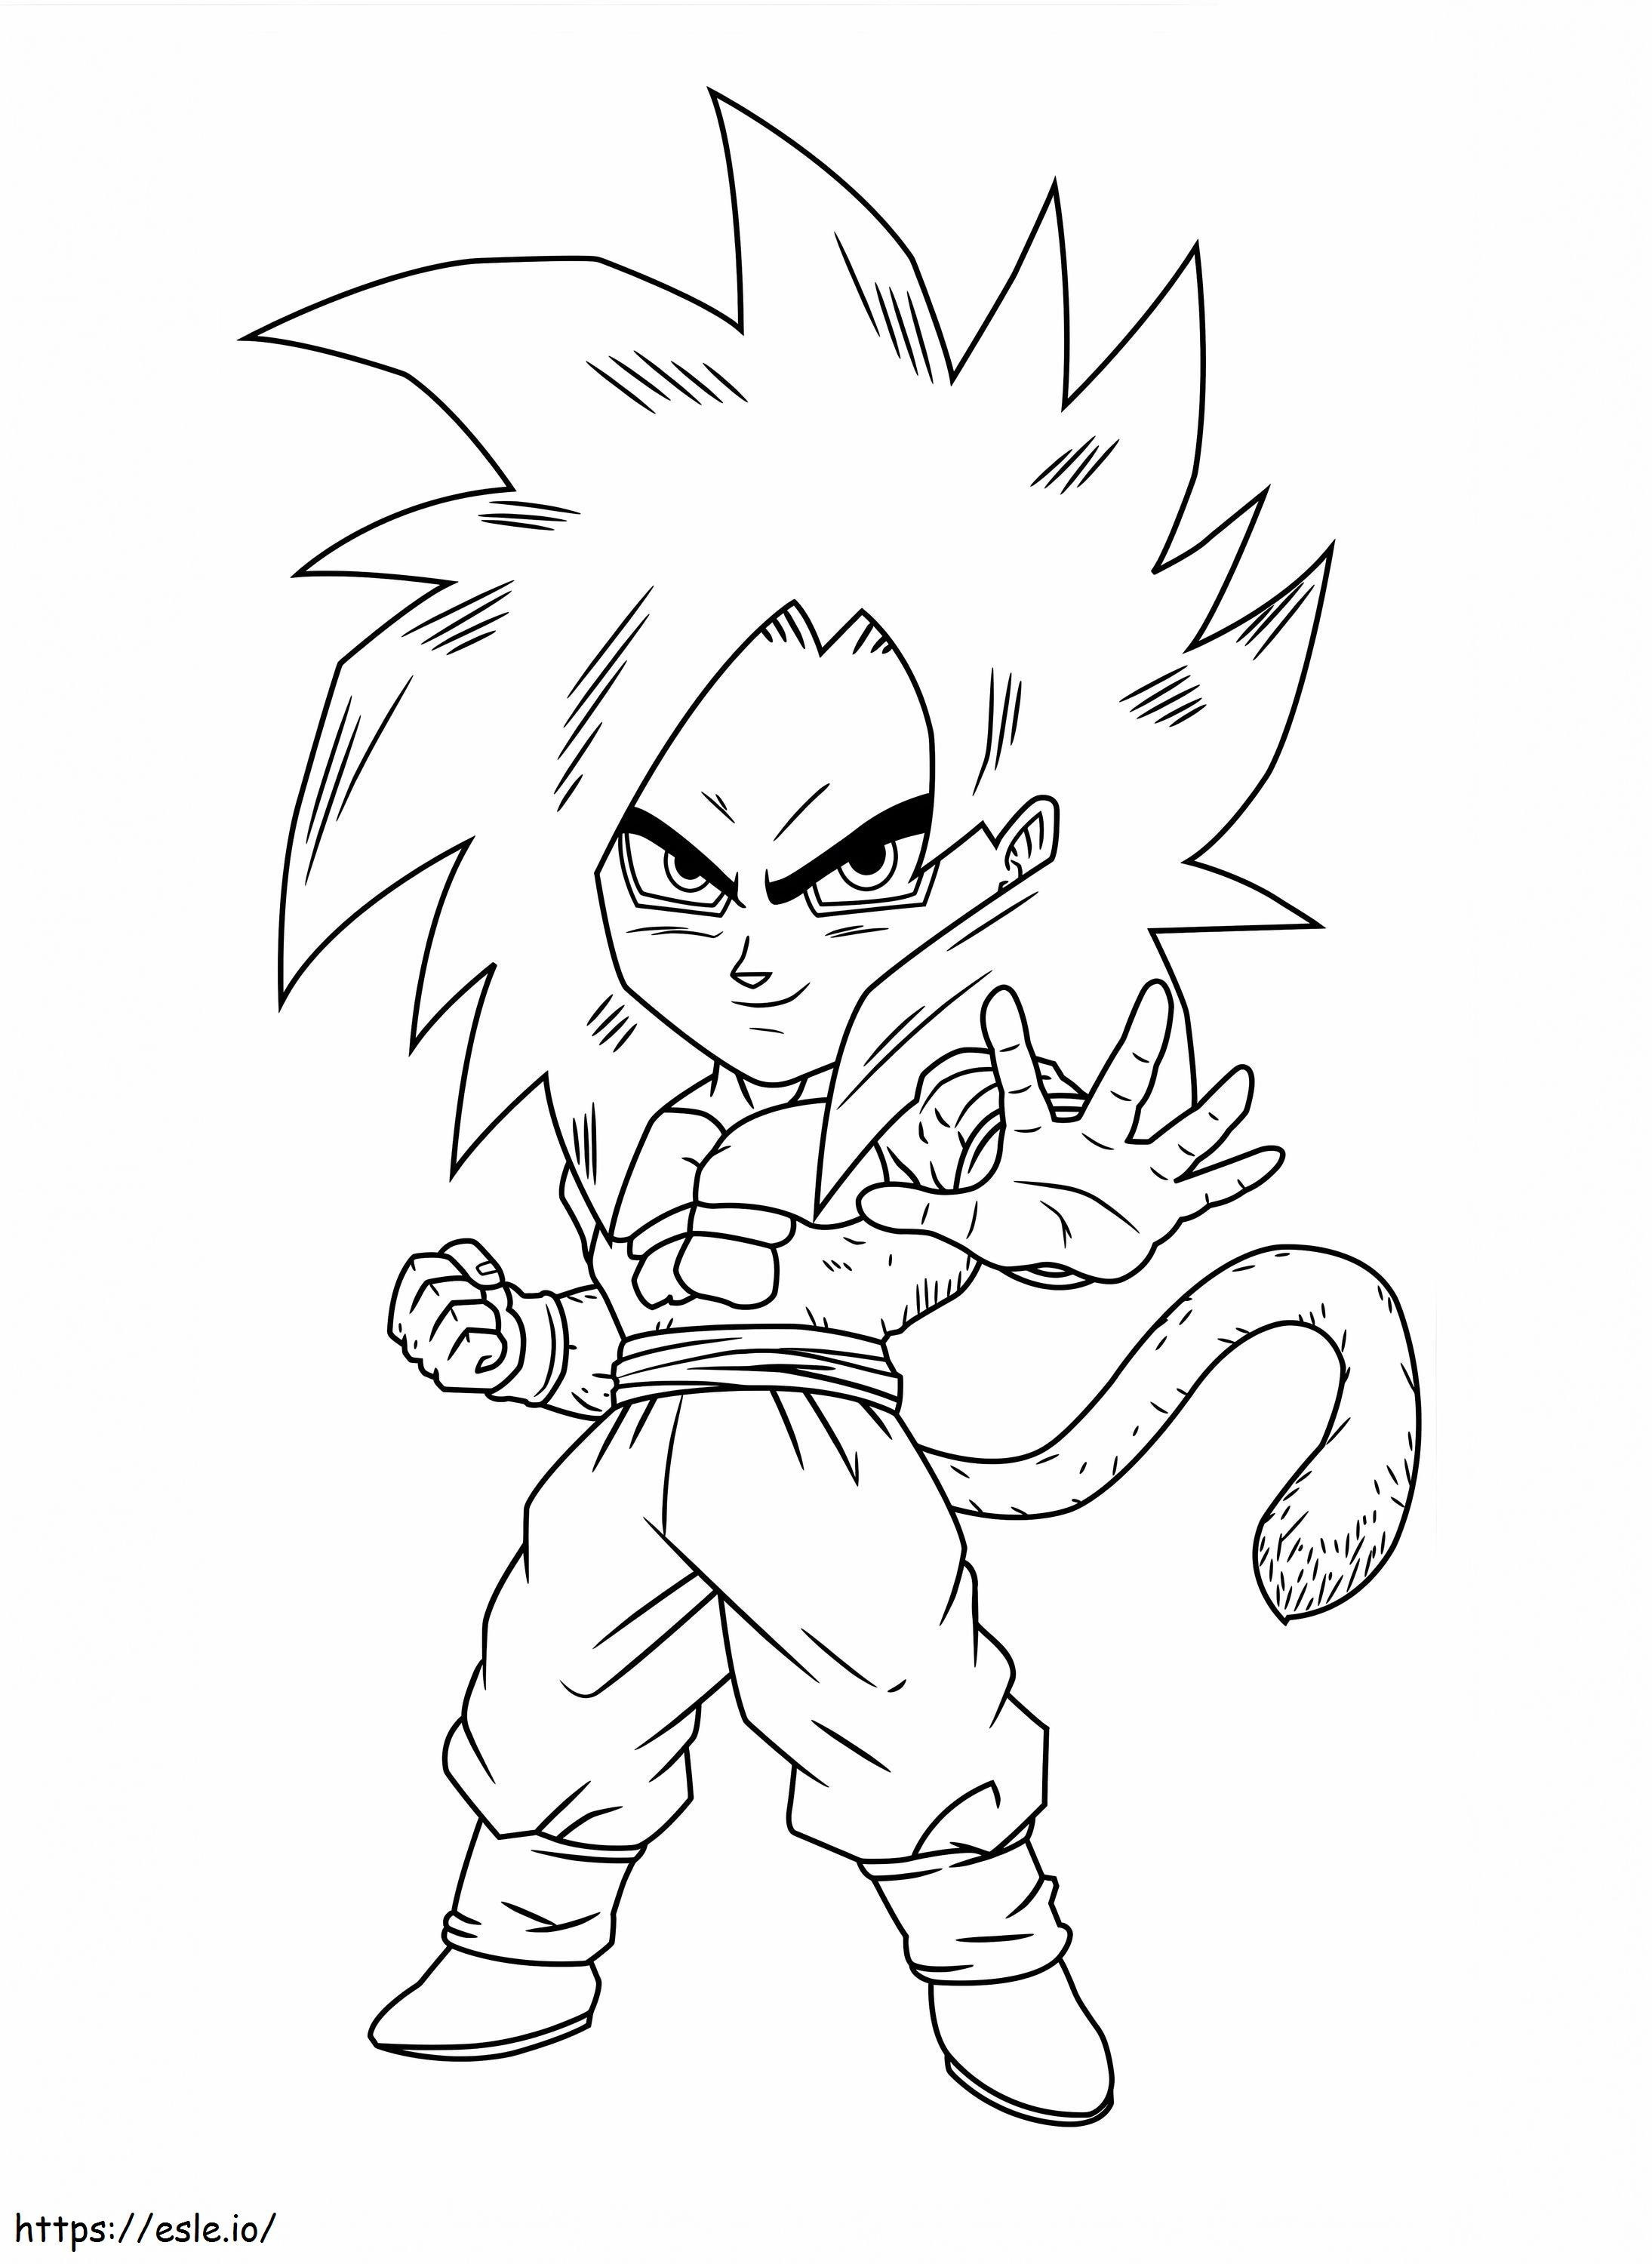 1551080619 226 2267467 Kid Goku -fanikuva Chibi Goku värityskuva